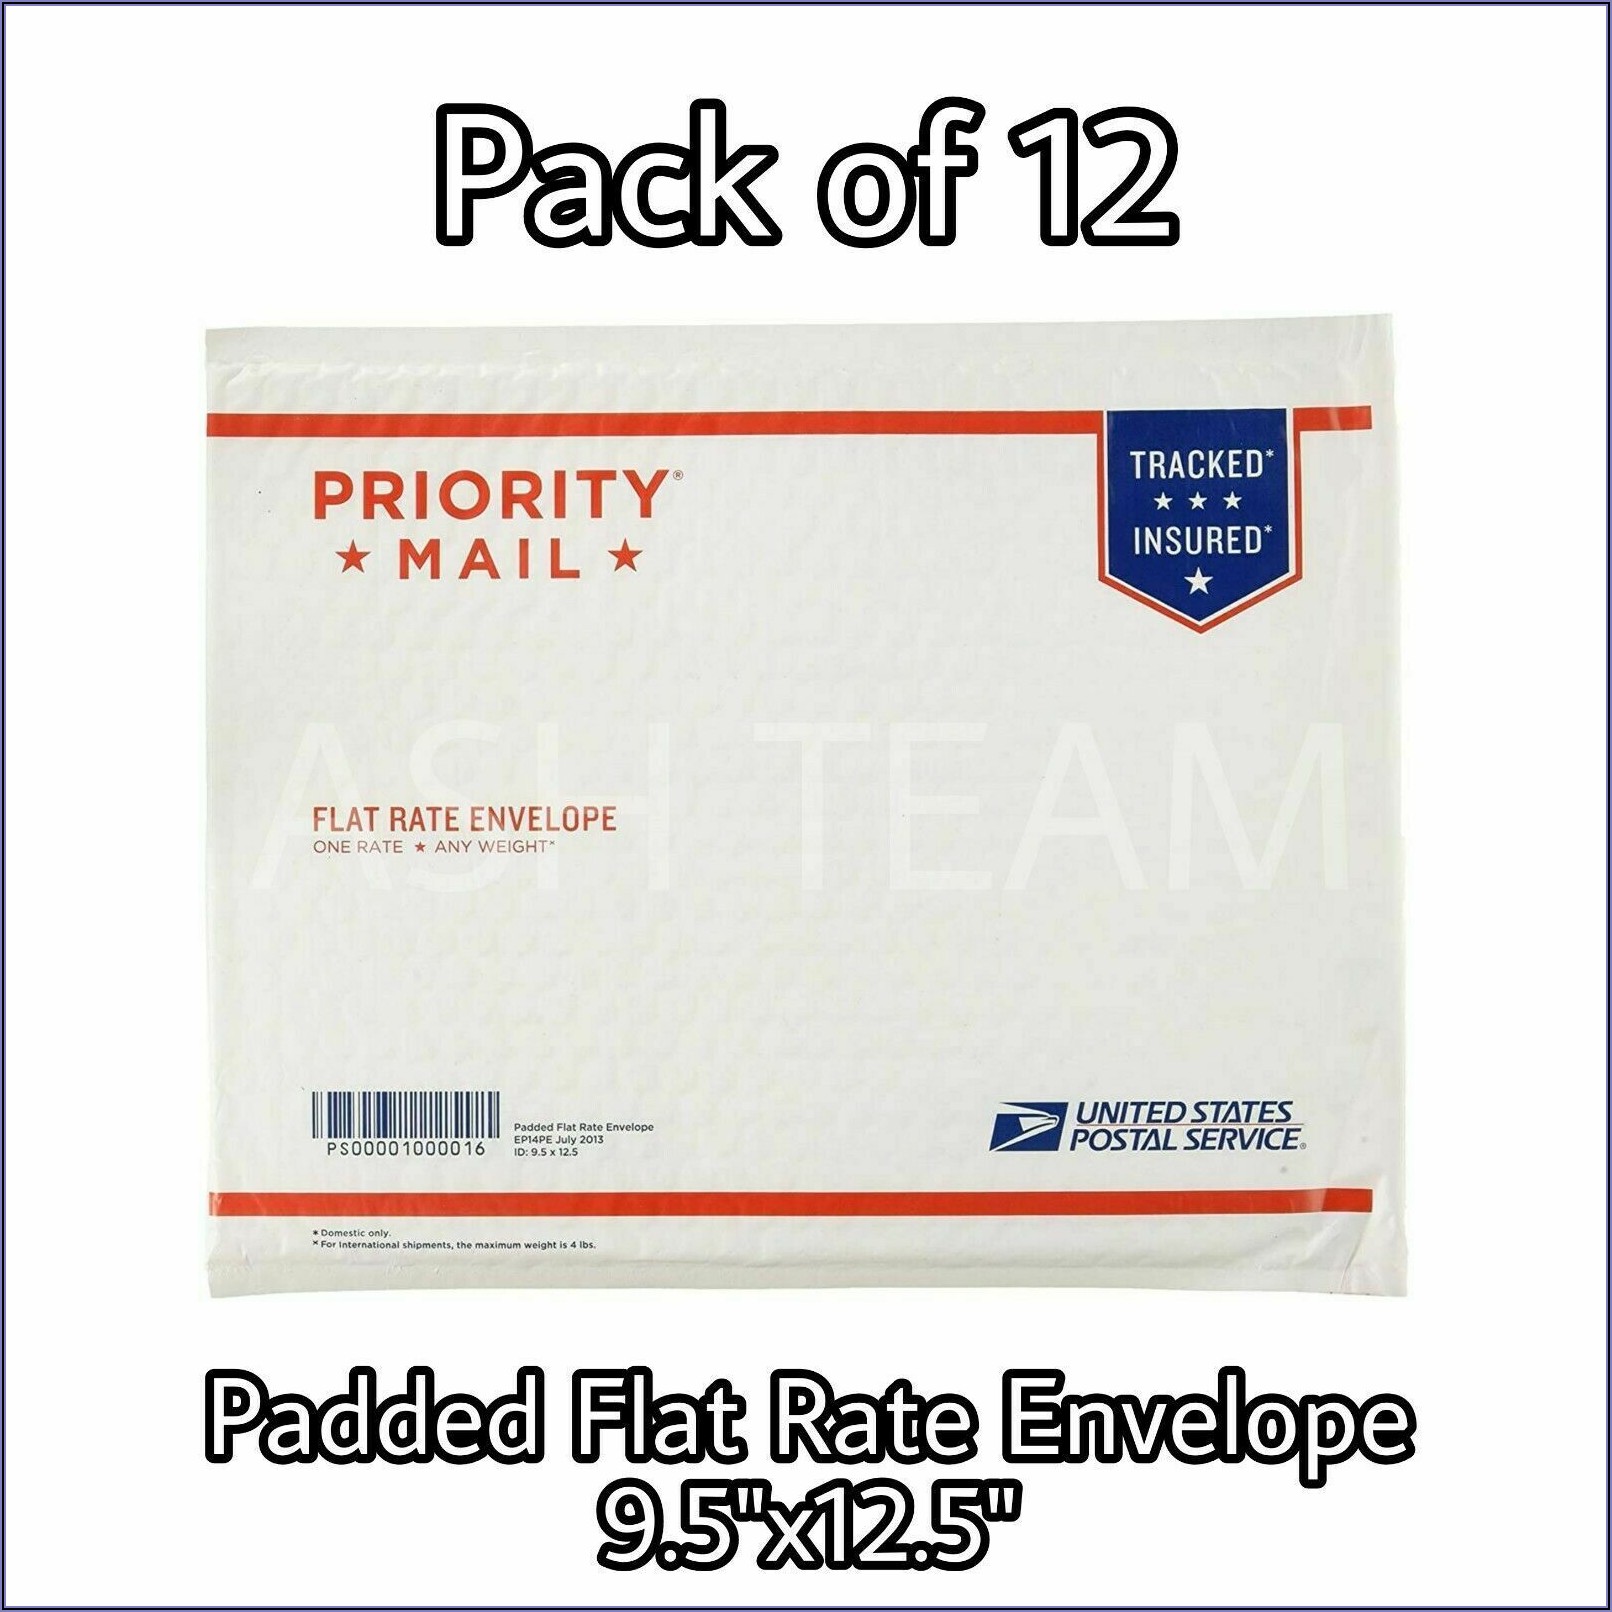 Priority Mail Mailing Envelope Vs Flat Rate Envelope - Envelope ...